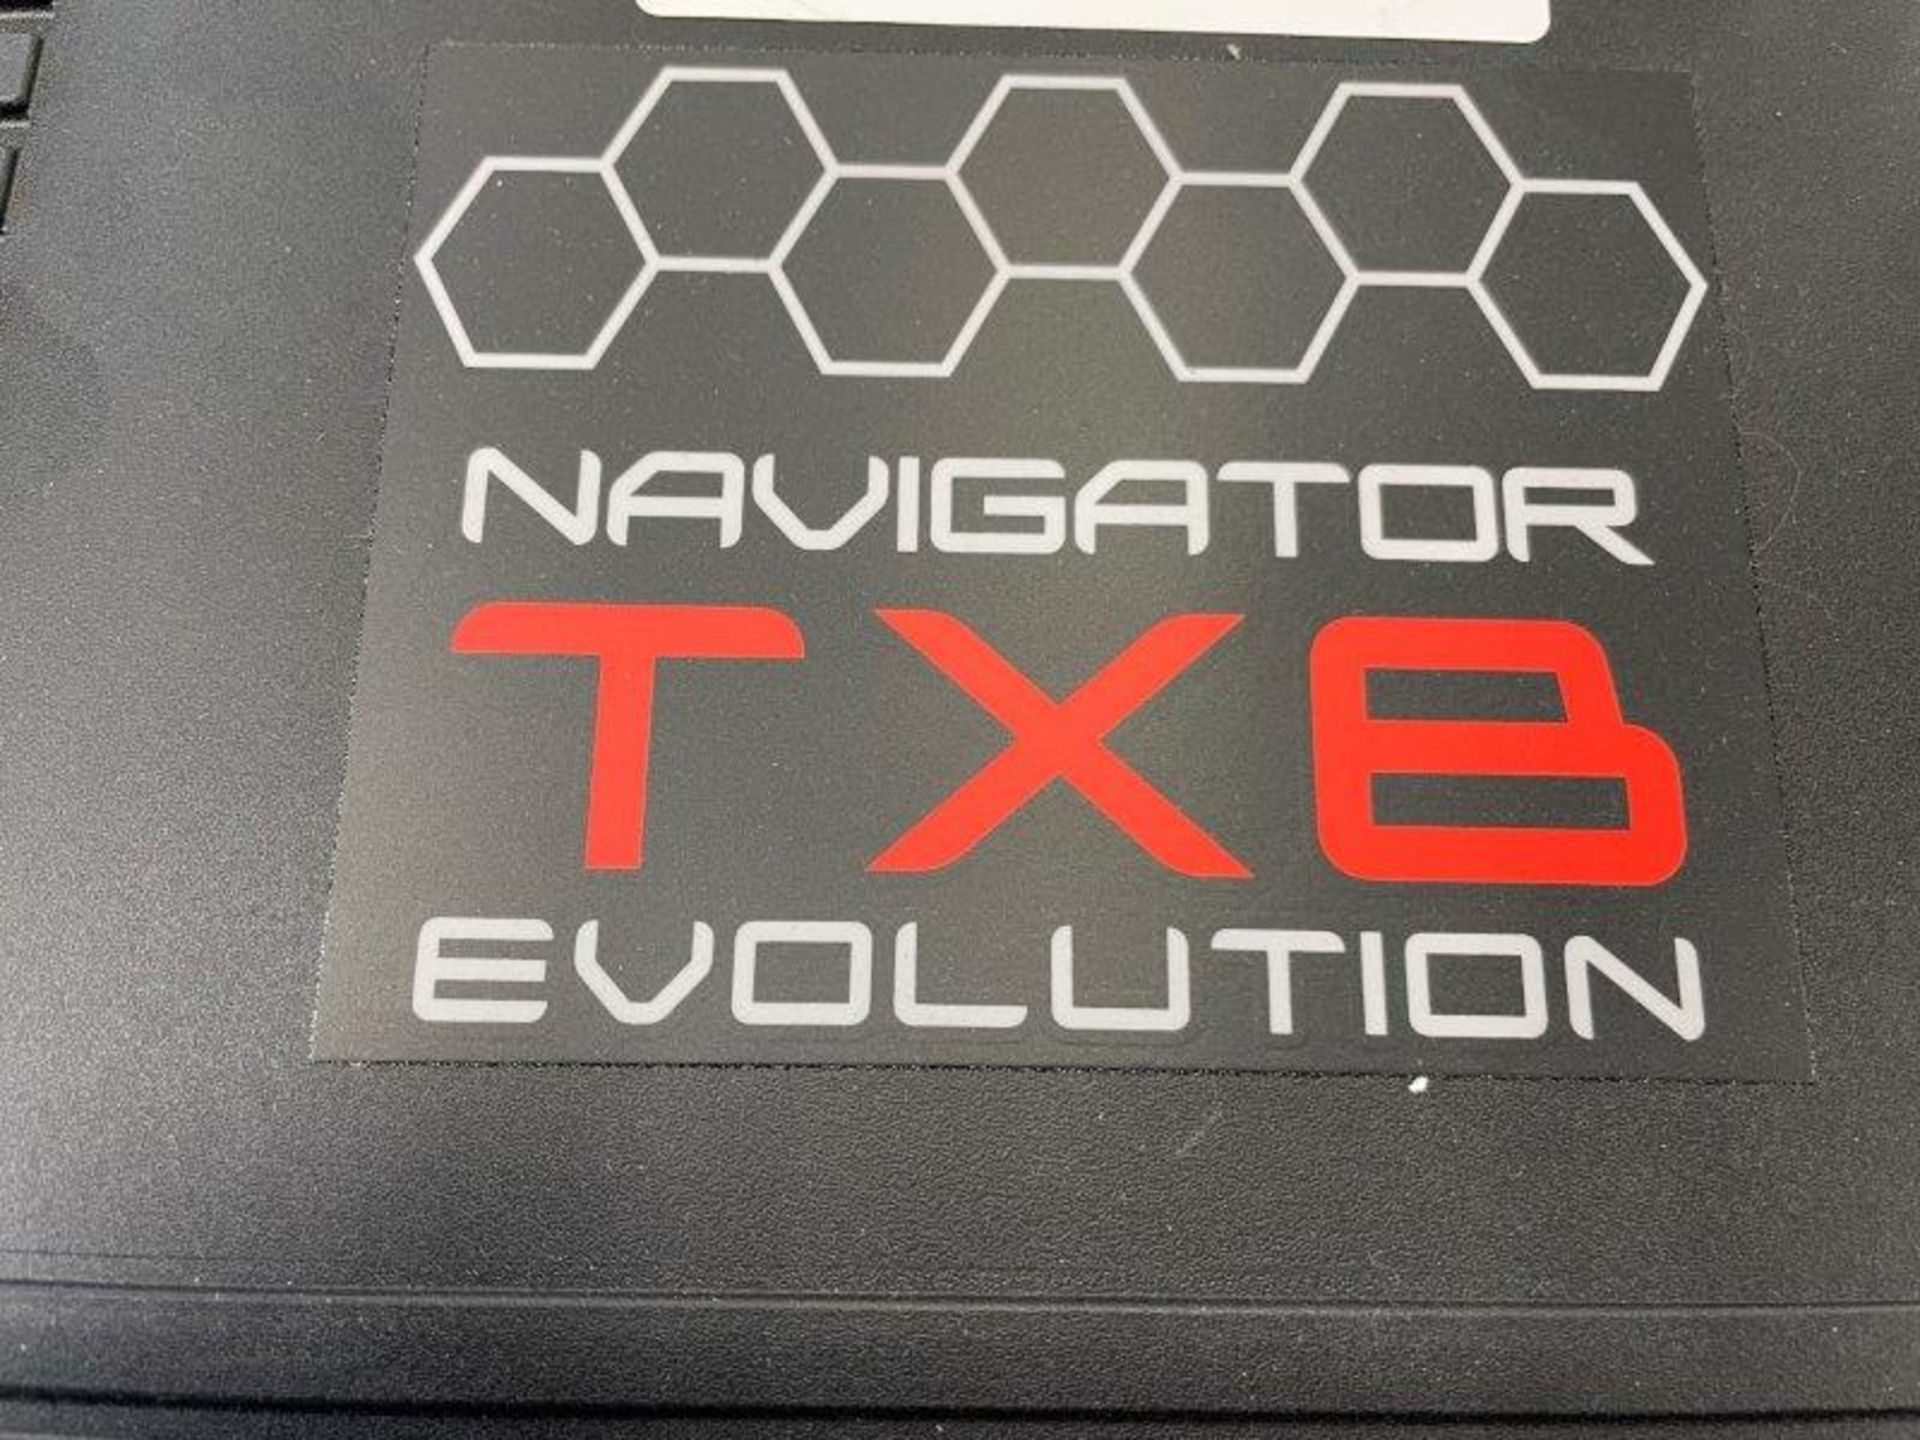 Texa Navigator TXB Evolution Diagnostic Unit - Image 4 of 6